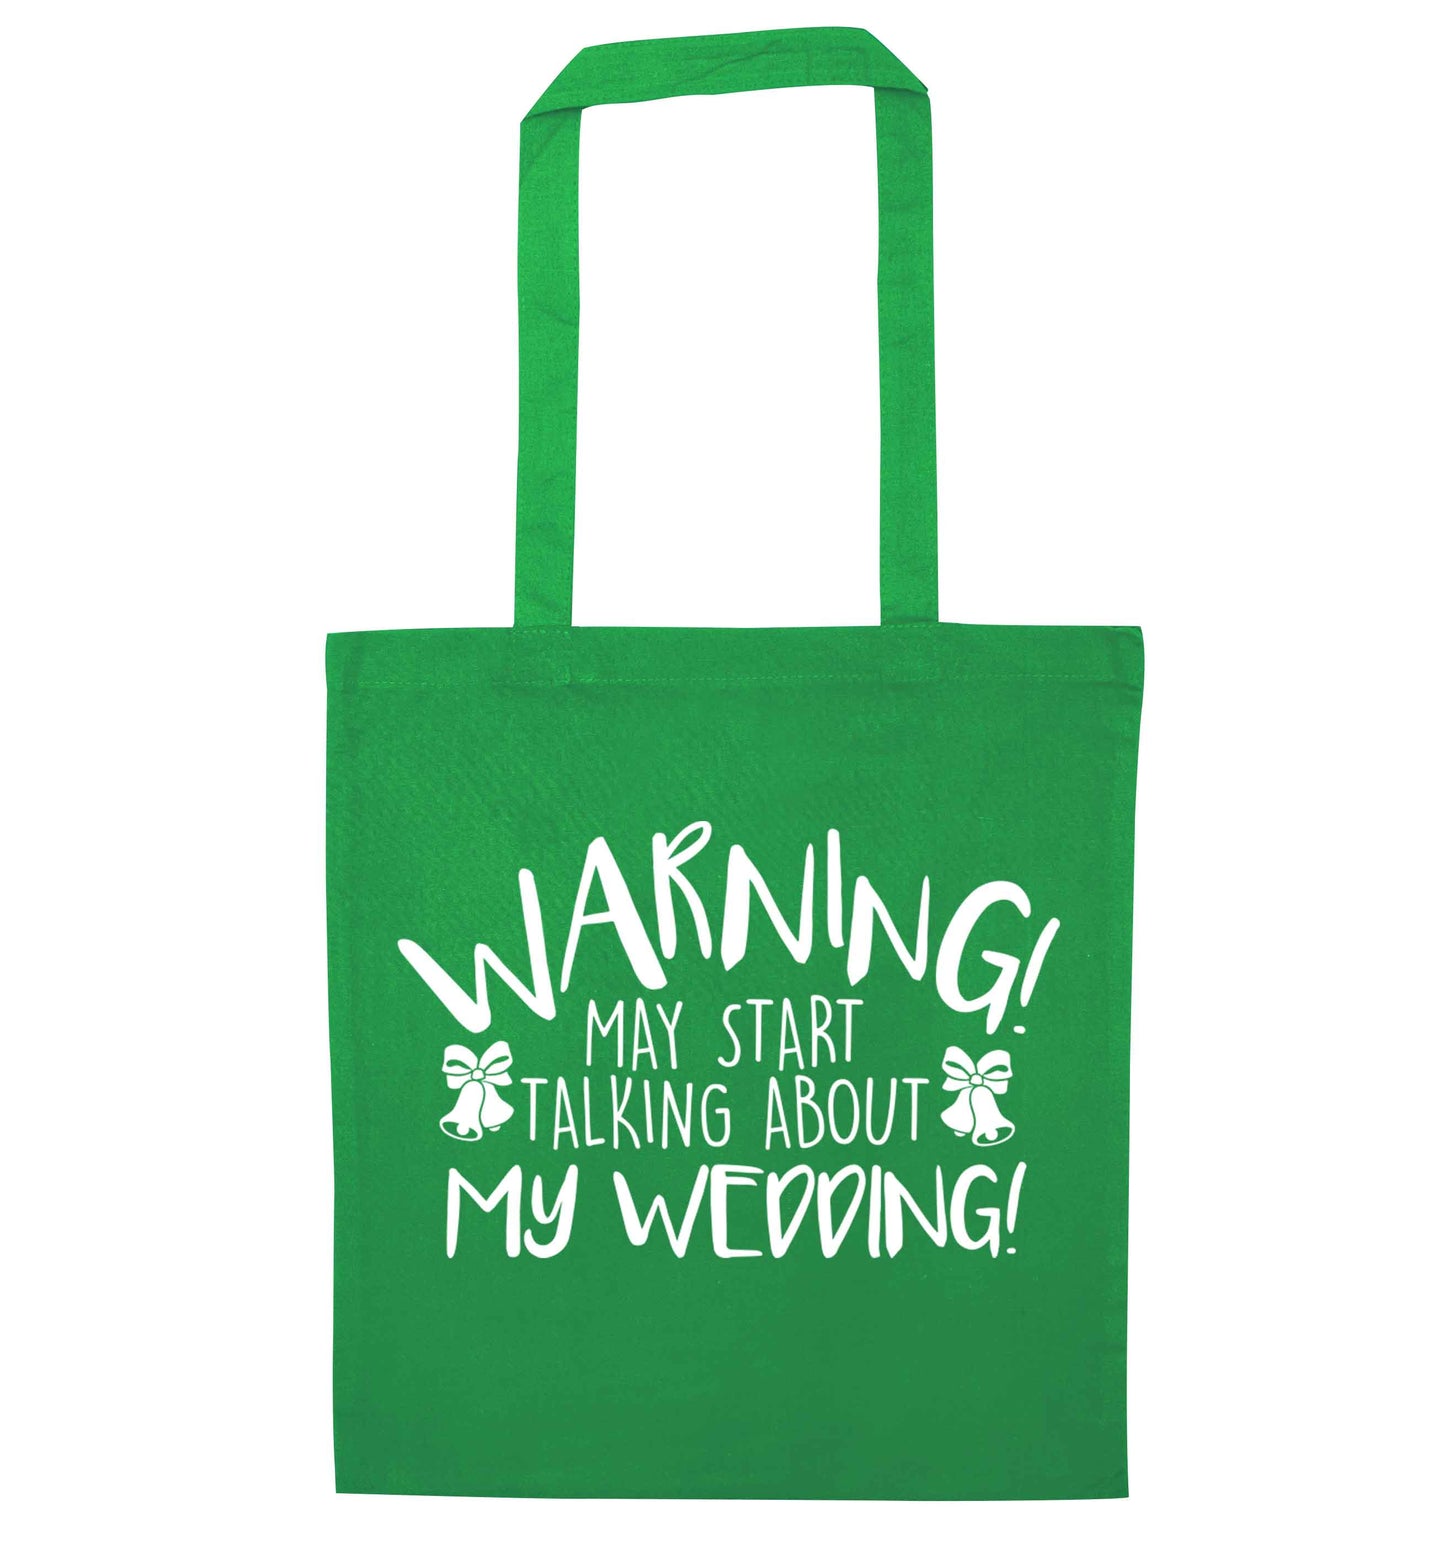 Warning may start talking about my wedding! green tote bag